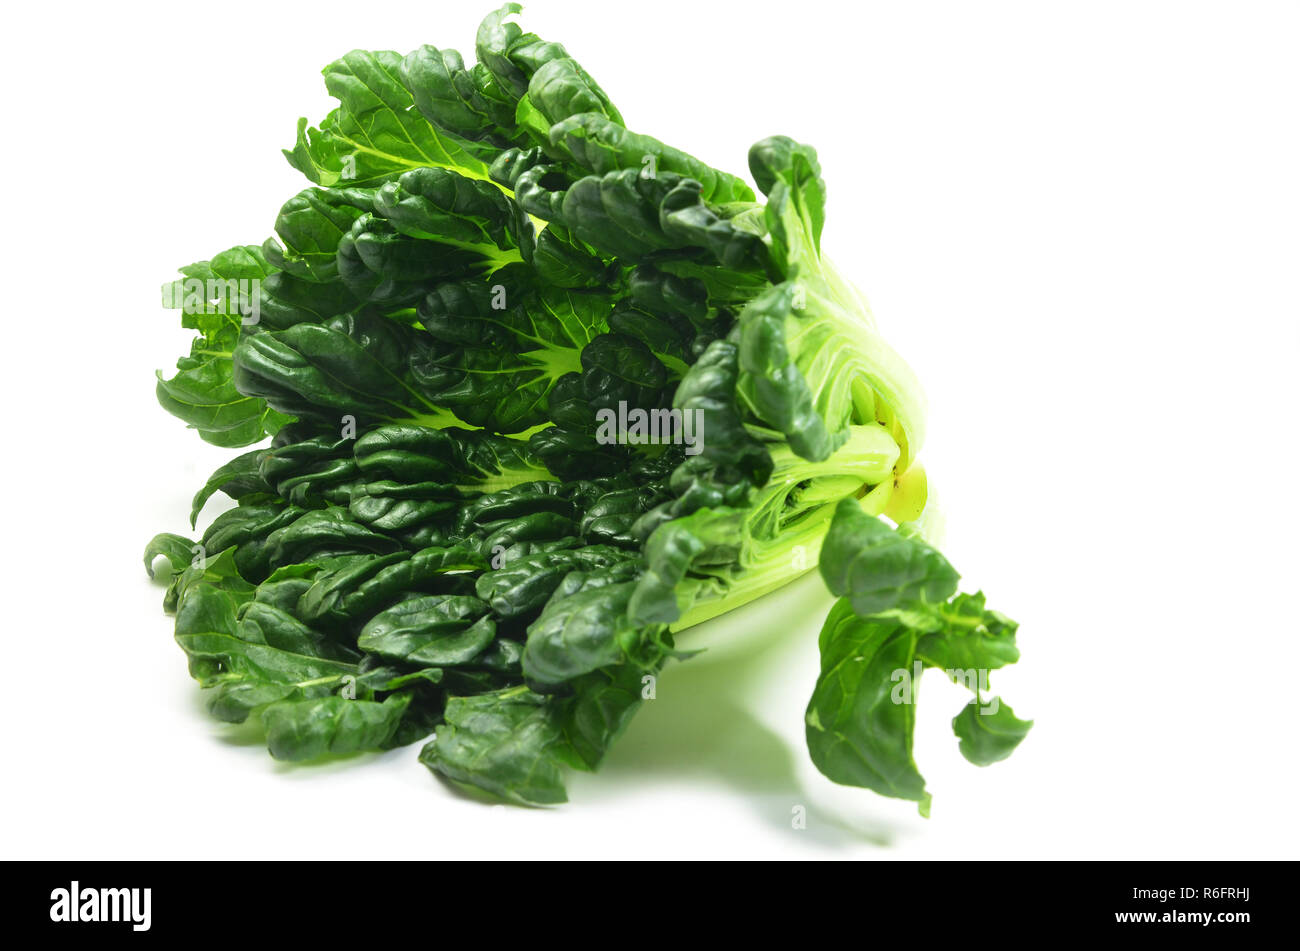 Chinesische flachbild Kohl (Brassica chinensis) oder Tah Tsai Kopfsalat Stockfoto